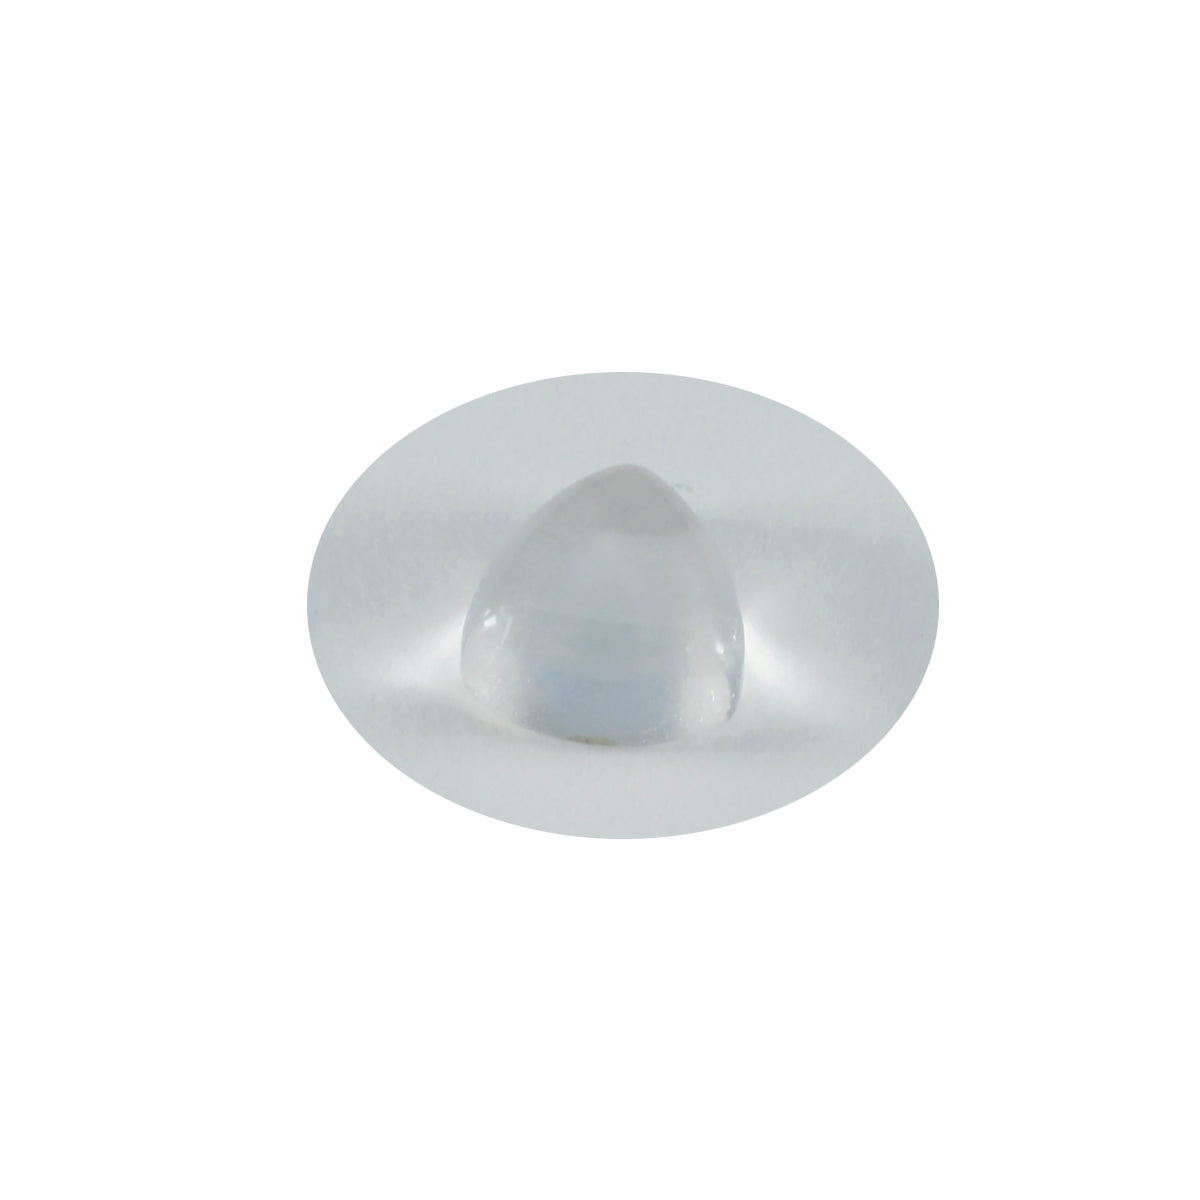 Riyogems 1PC White Crystal Quartz Cabochon 15x15 mm Trillion Shape A Quality Gems